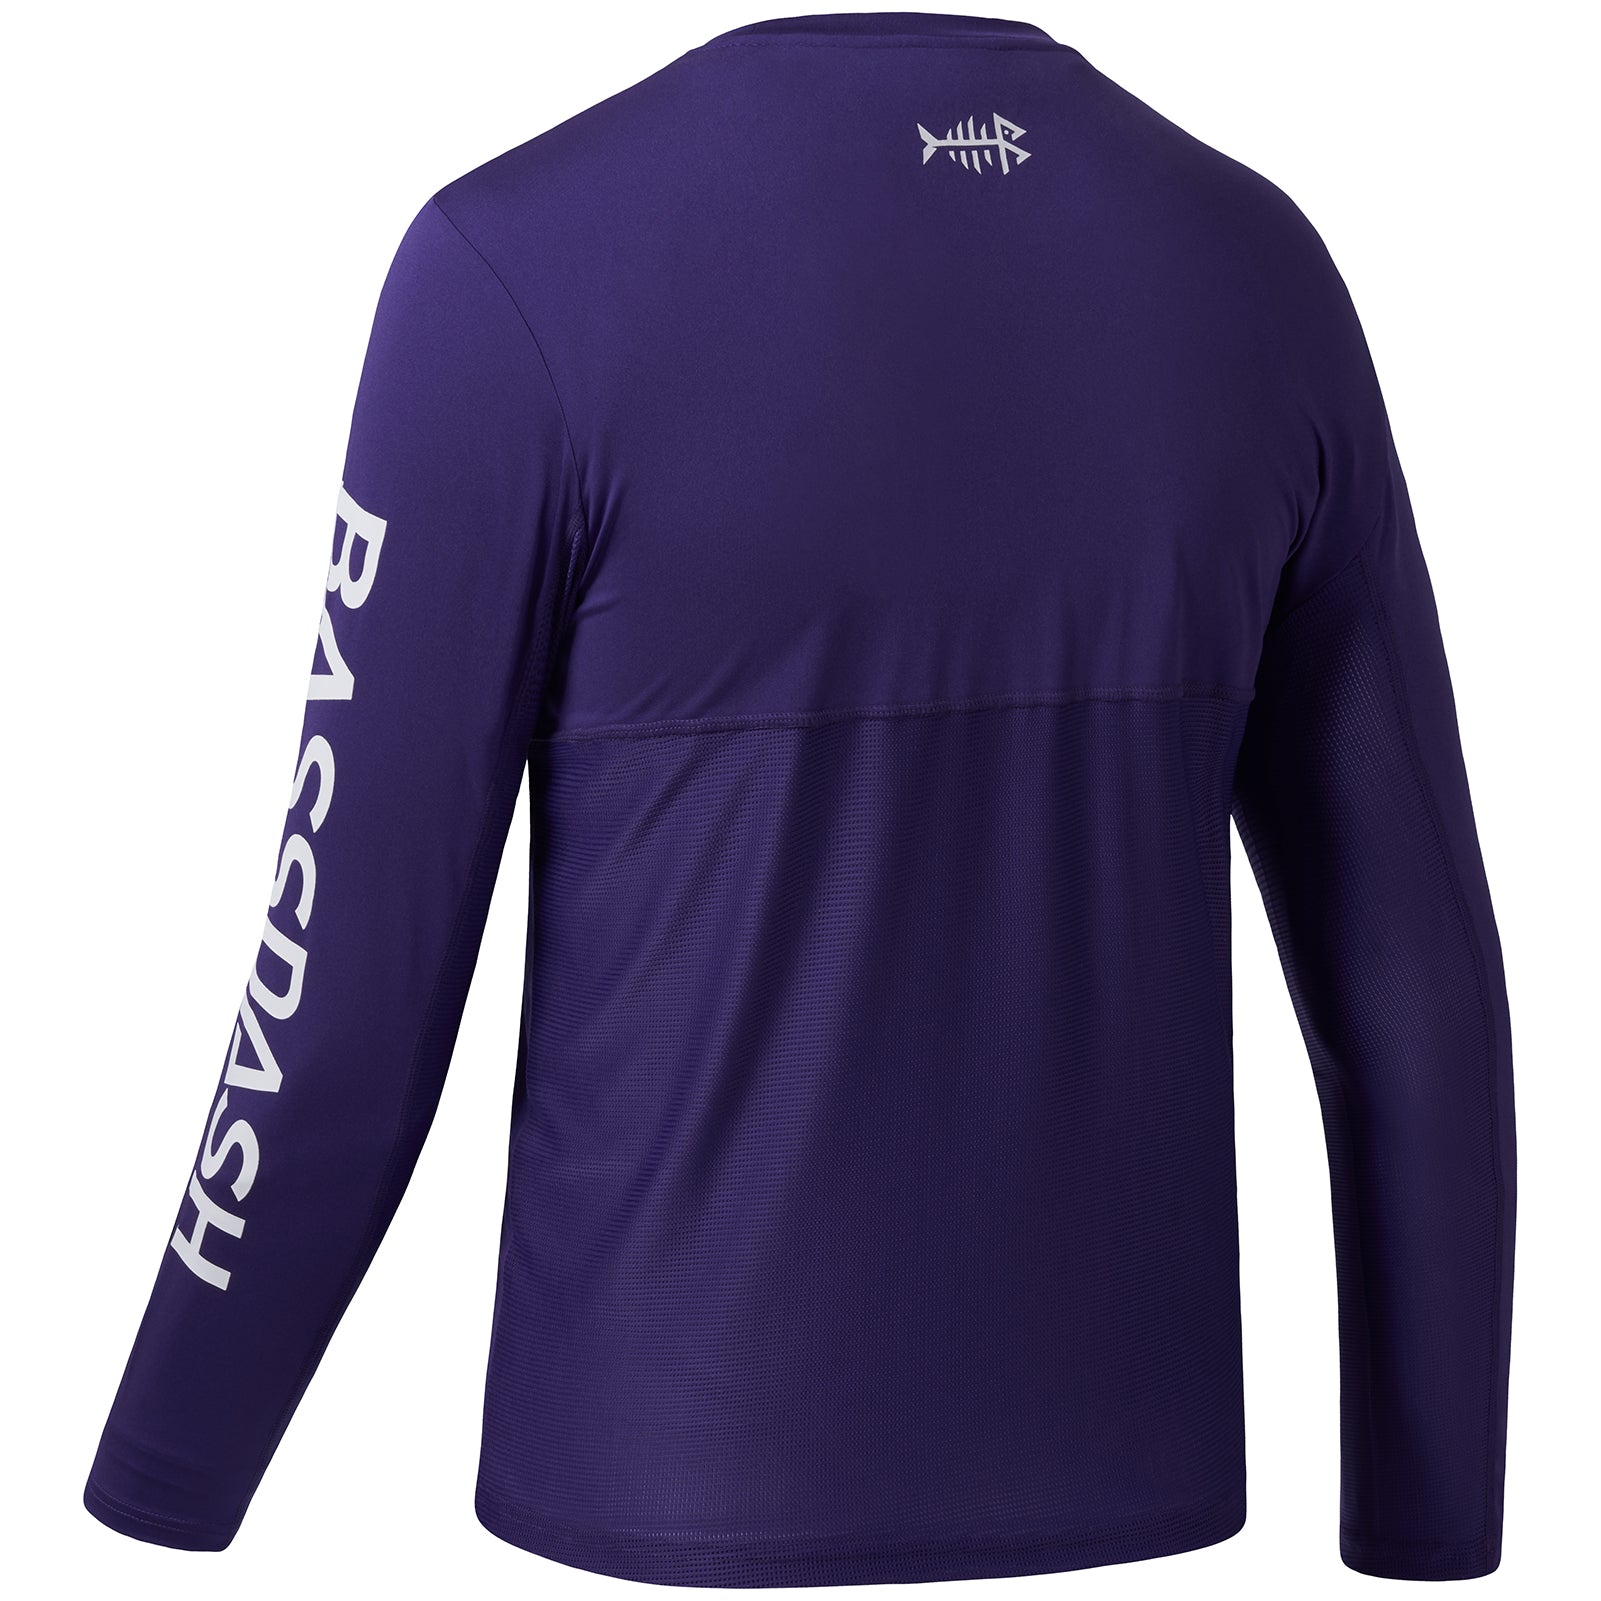 BASSDASH UPF 50+ Youth Fishing T Shirts Long Sleeve Performance UV  Protection Tee for Boys Girls Cool Grey/Vivid Blue Logo X-Large